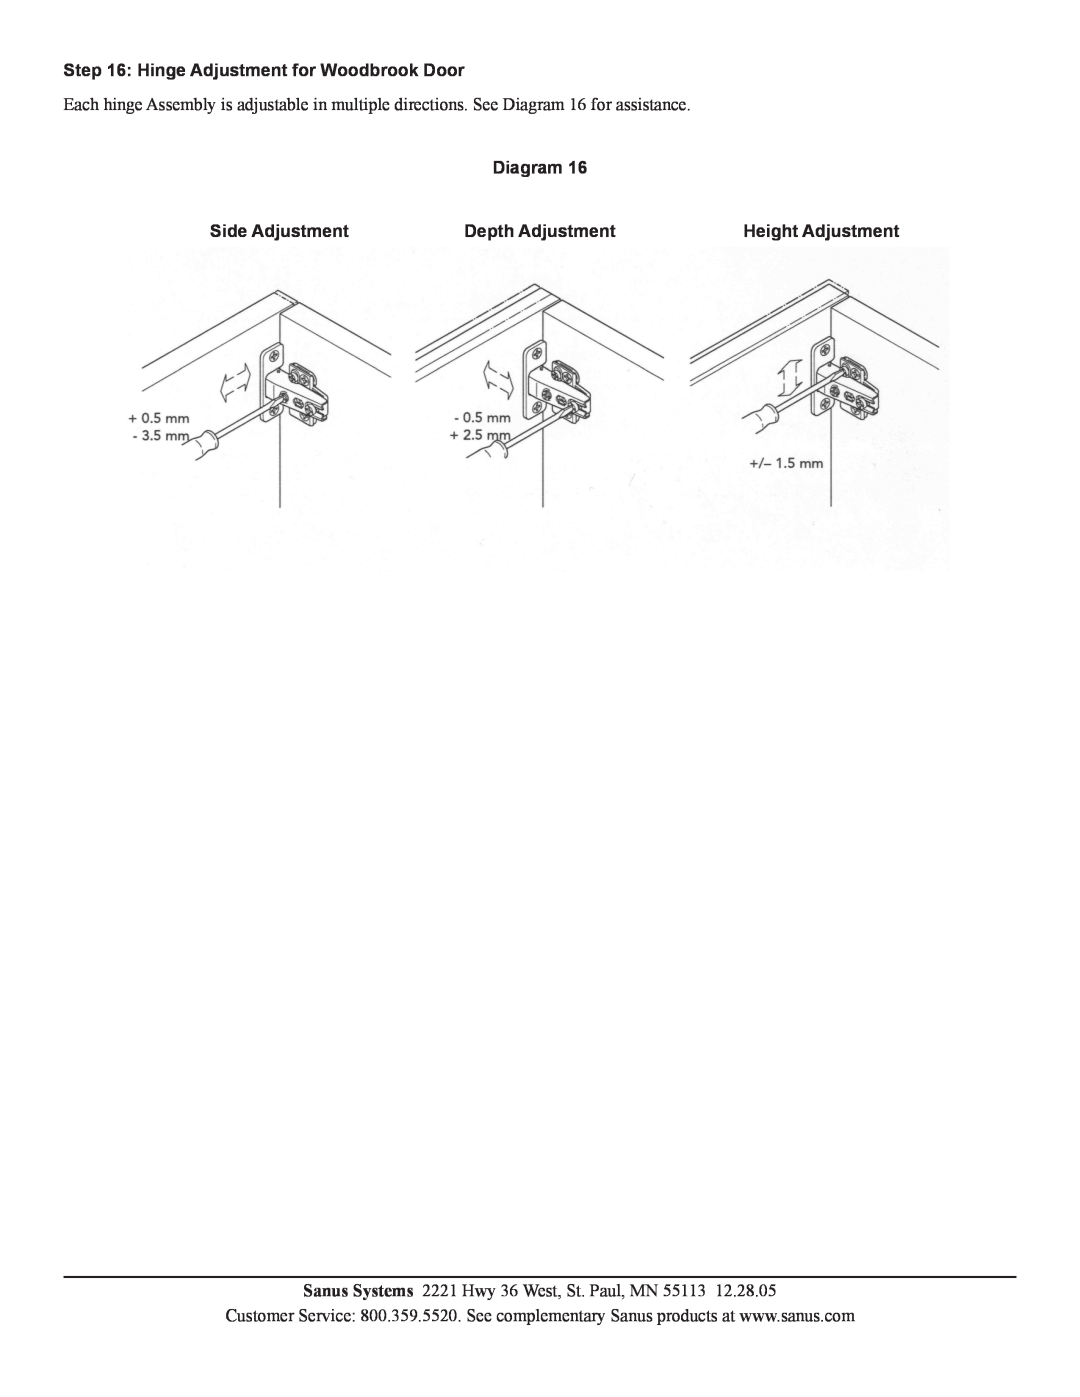 Sanus Systems WFV66 Hinge Adjustment for Woodbrook Door, Side Adjustment, Depth Adjustment, Height Adjustment, Diagram 